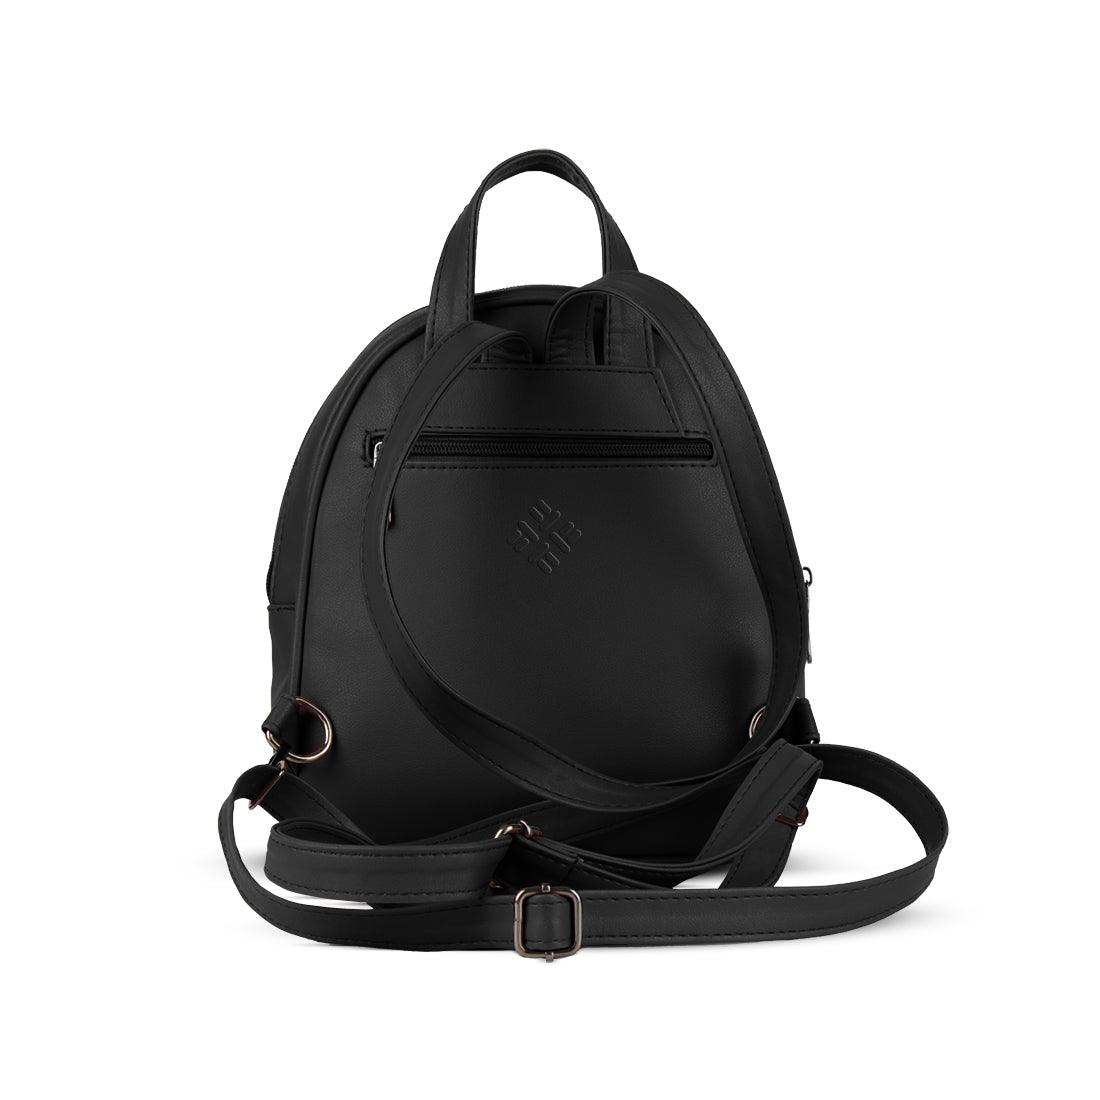 Black O Mini Backpacks Colorful Pattern - CANVAEGYPT